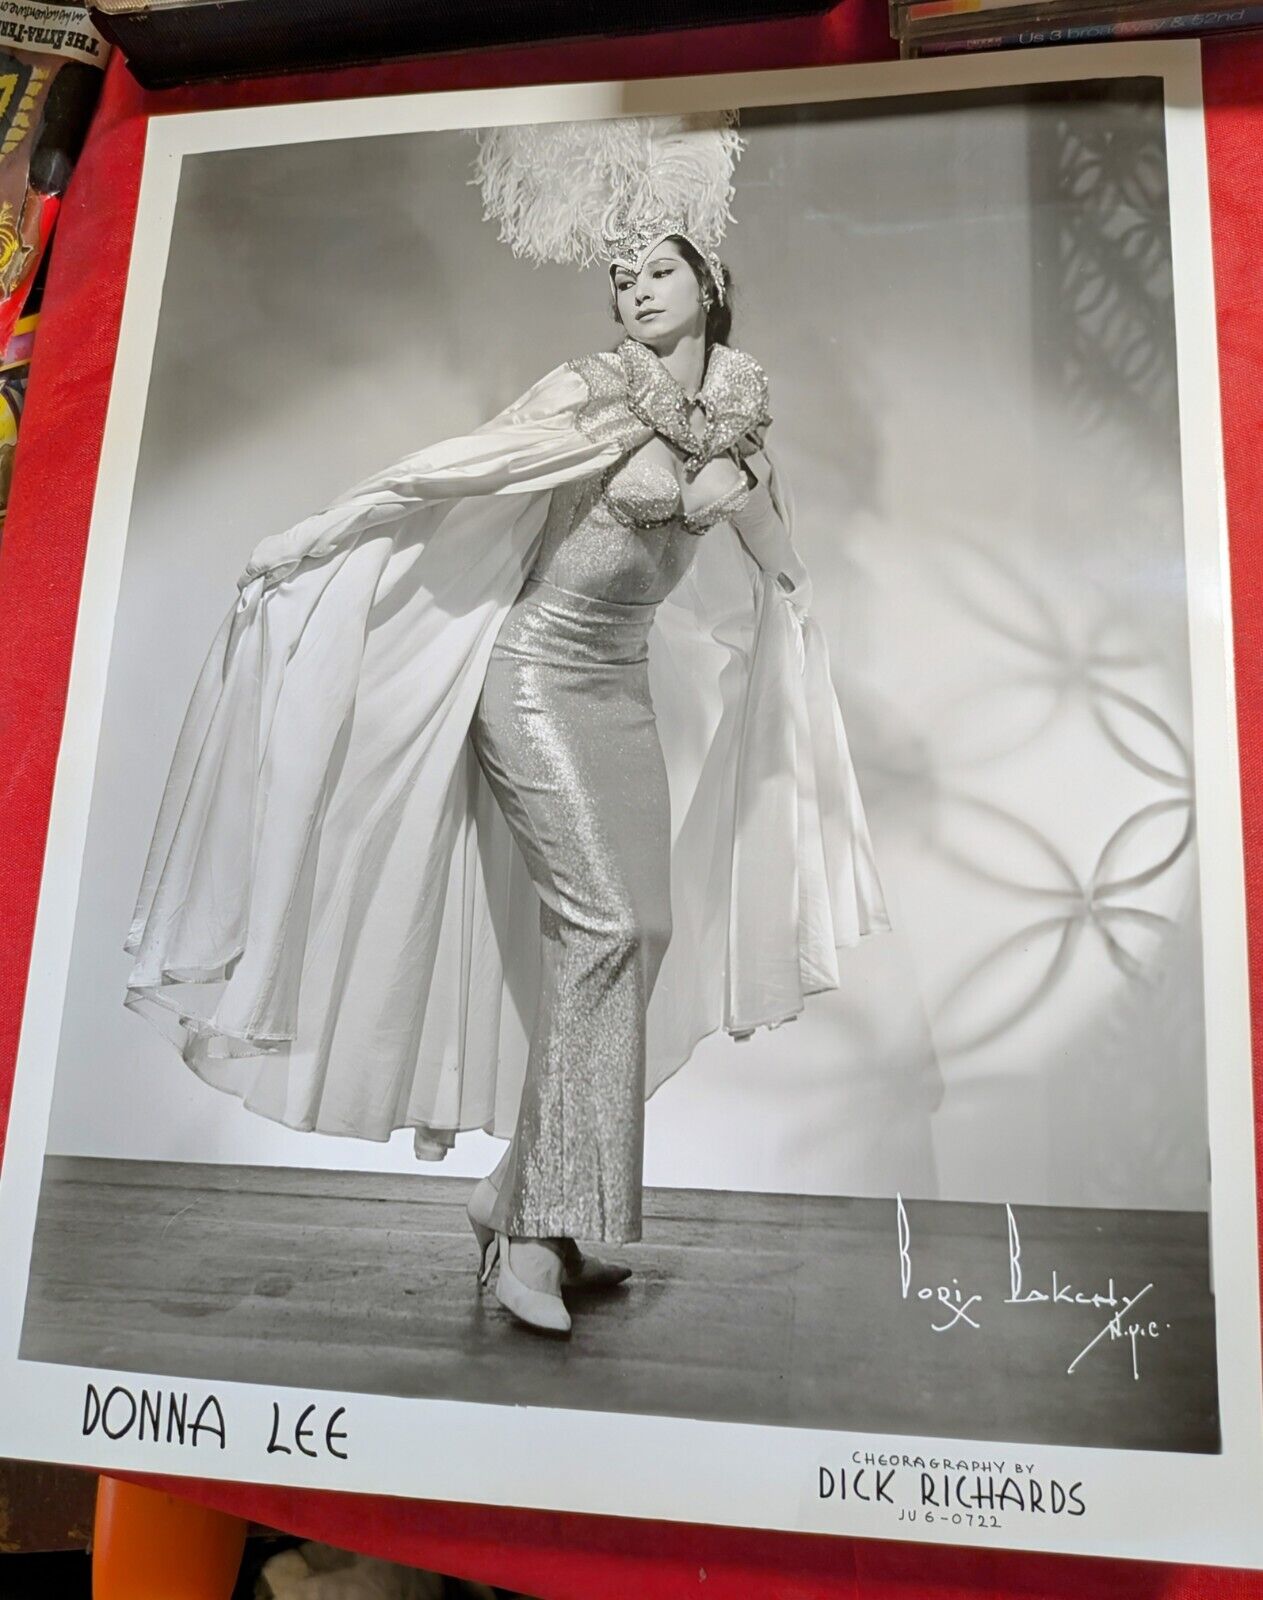 VTG DONNA LEE BURLESQUE DANCER ORIGINAL B&W PHOTO 8x10 Boris Bakchy NYC 1950s